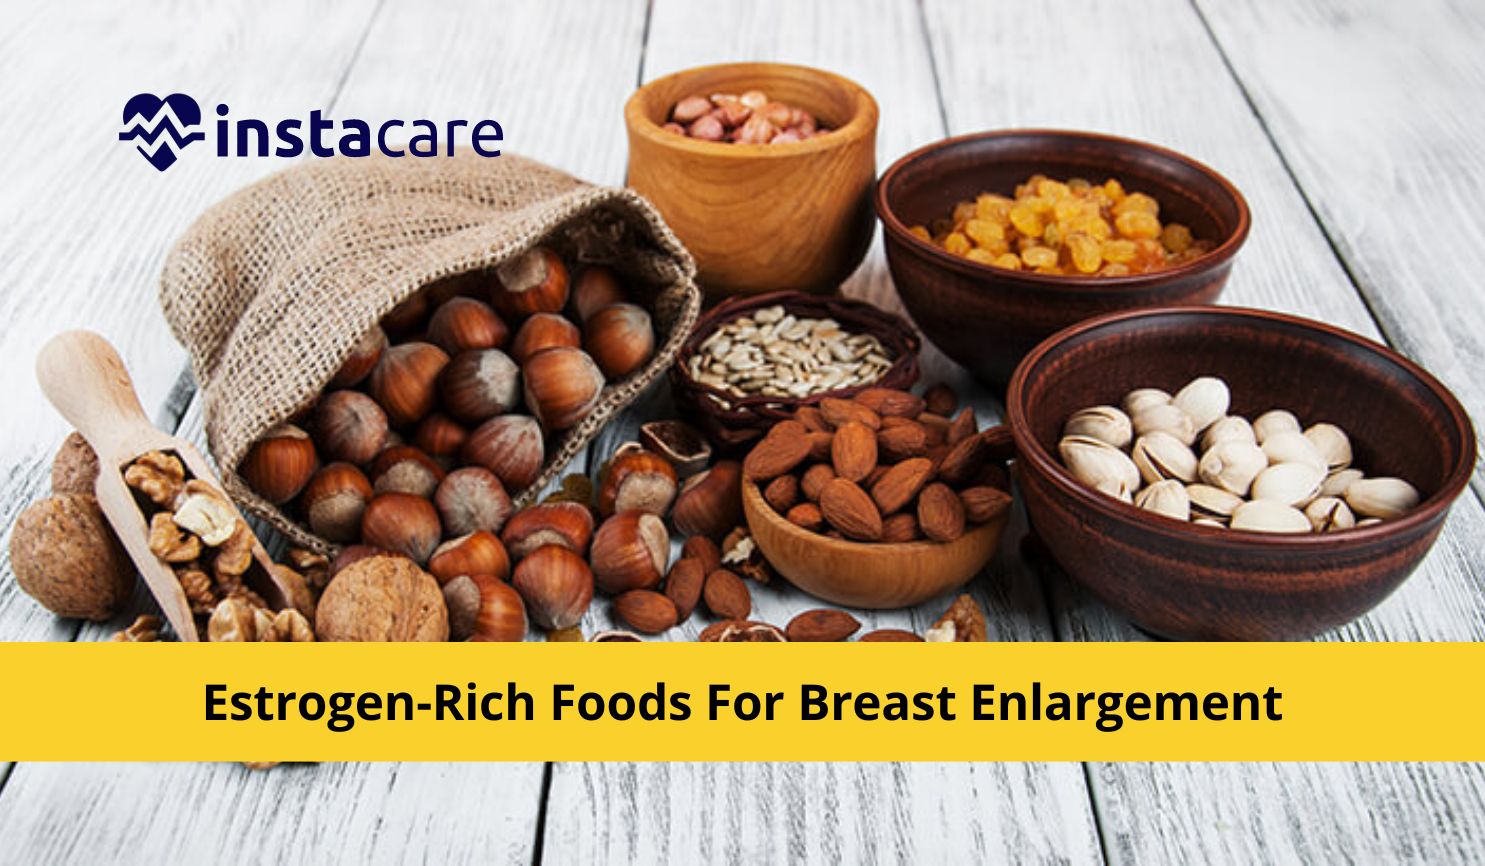 Estrogen-Rich Foods For Breast Enlargement – What to Eat for